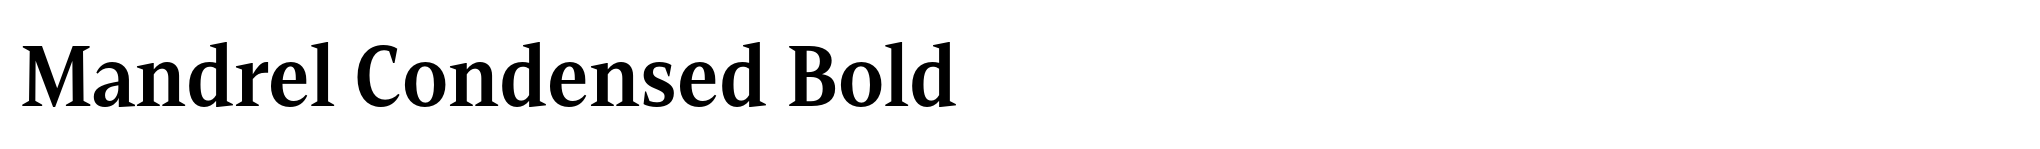 Mandrel Condensed Bold image